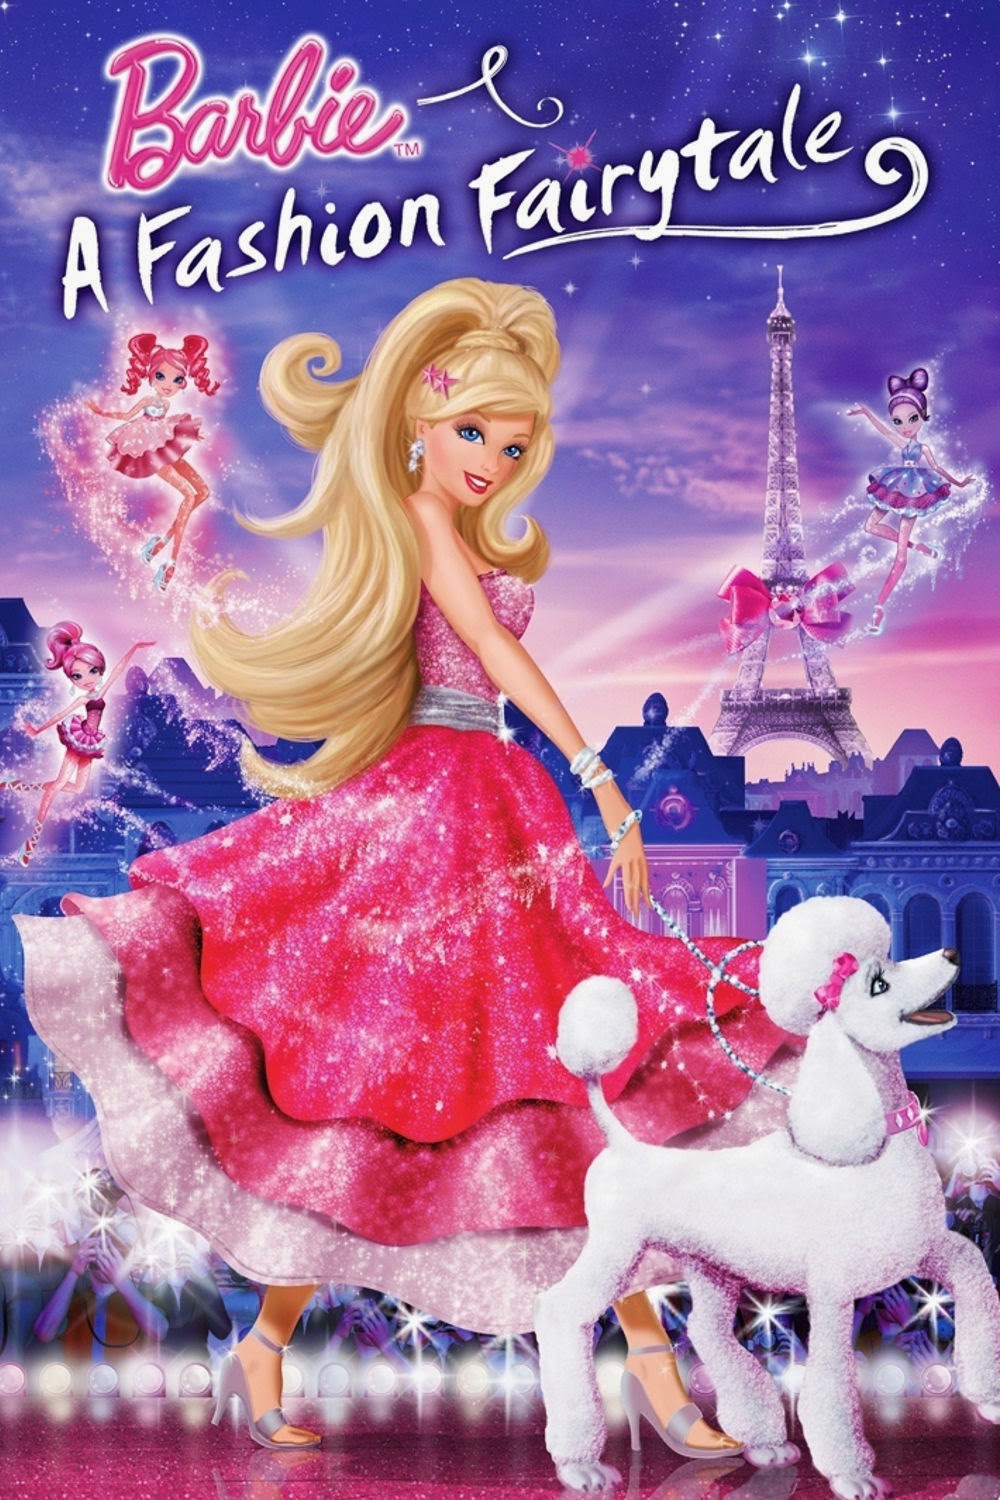 Barbie A Fashion Fairytale [DVD] [2010] Best Buy